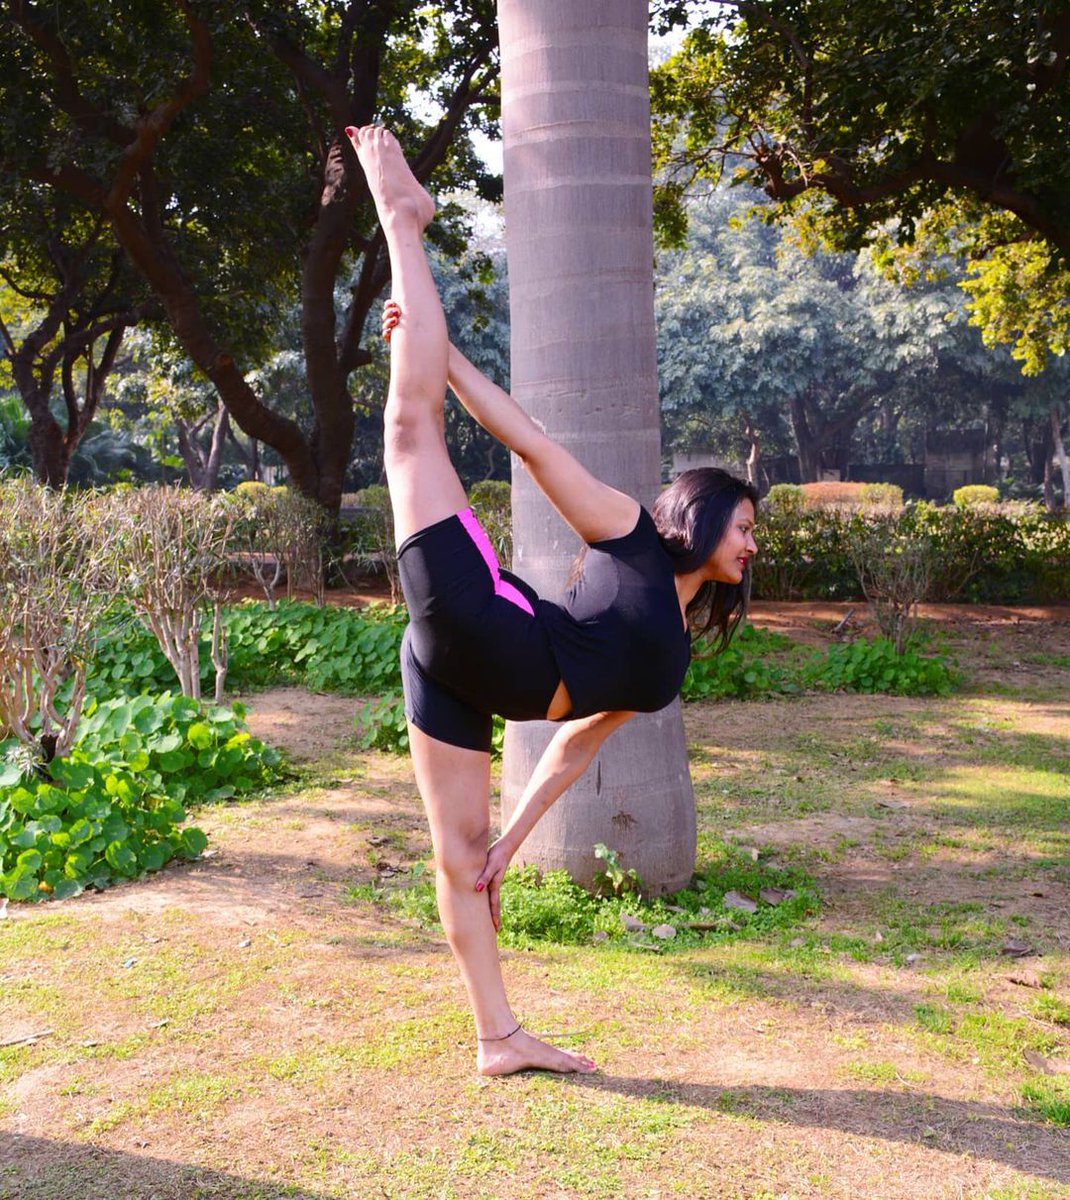 🔗 View More >> hana.fit/yoga/divya-agg…
------
#advanceyogini #advanceyogis #beyourself #fitnessfam #flexiblegirls #flexwithjessie #holi #instagram #instareelsindia❤️ #legstrength #myyogamylife #myyogapractice #natraj #outdoorshoot #practice #promoteindianyogis #strechhamstrin...